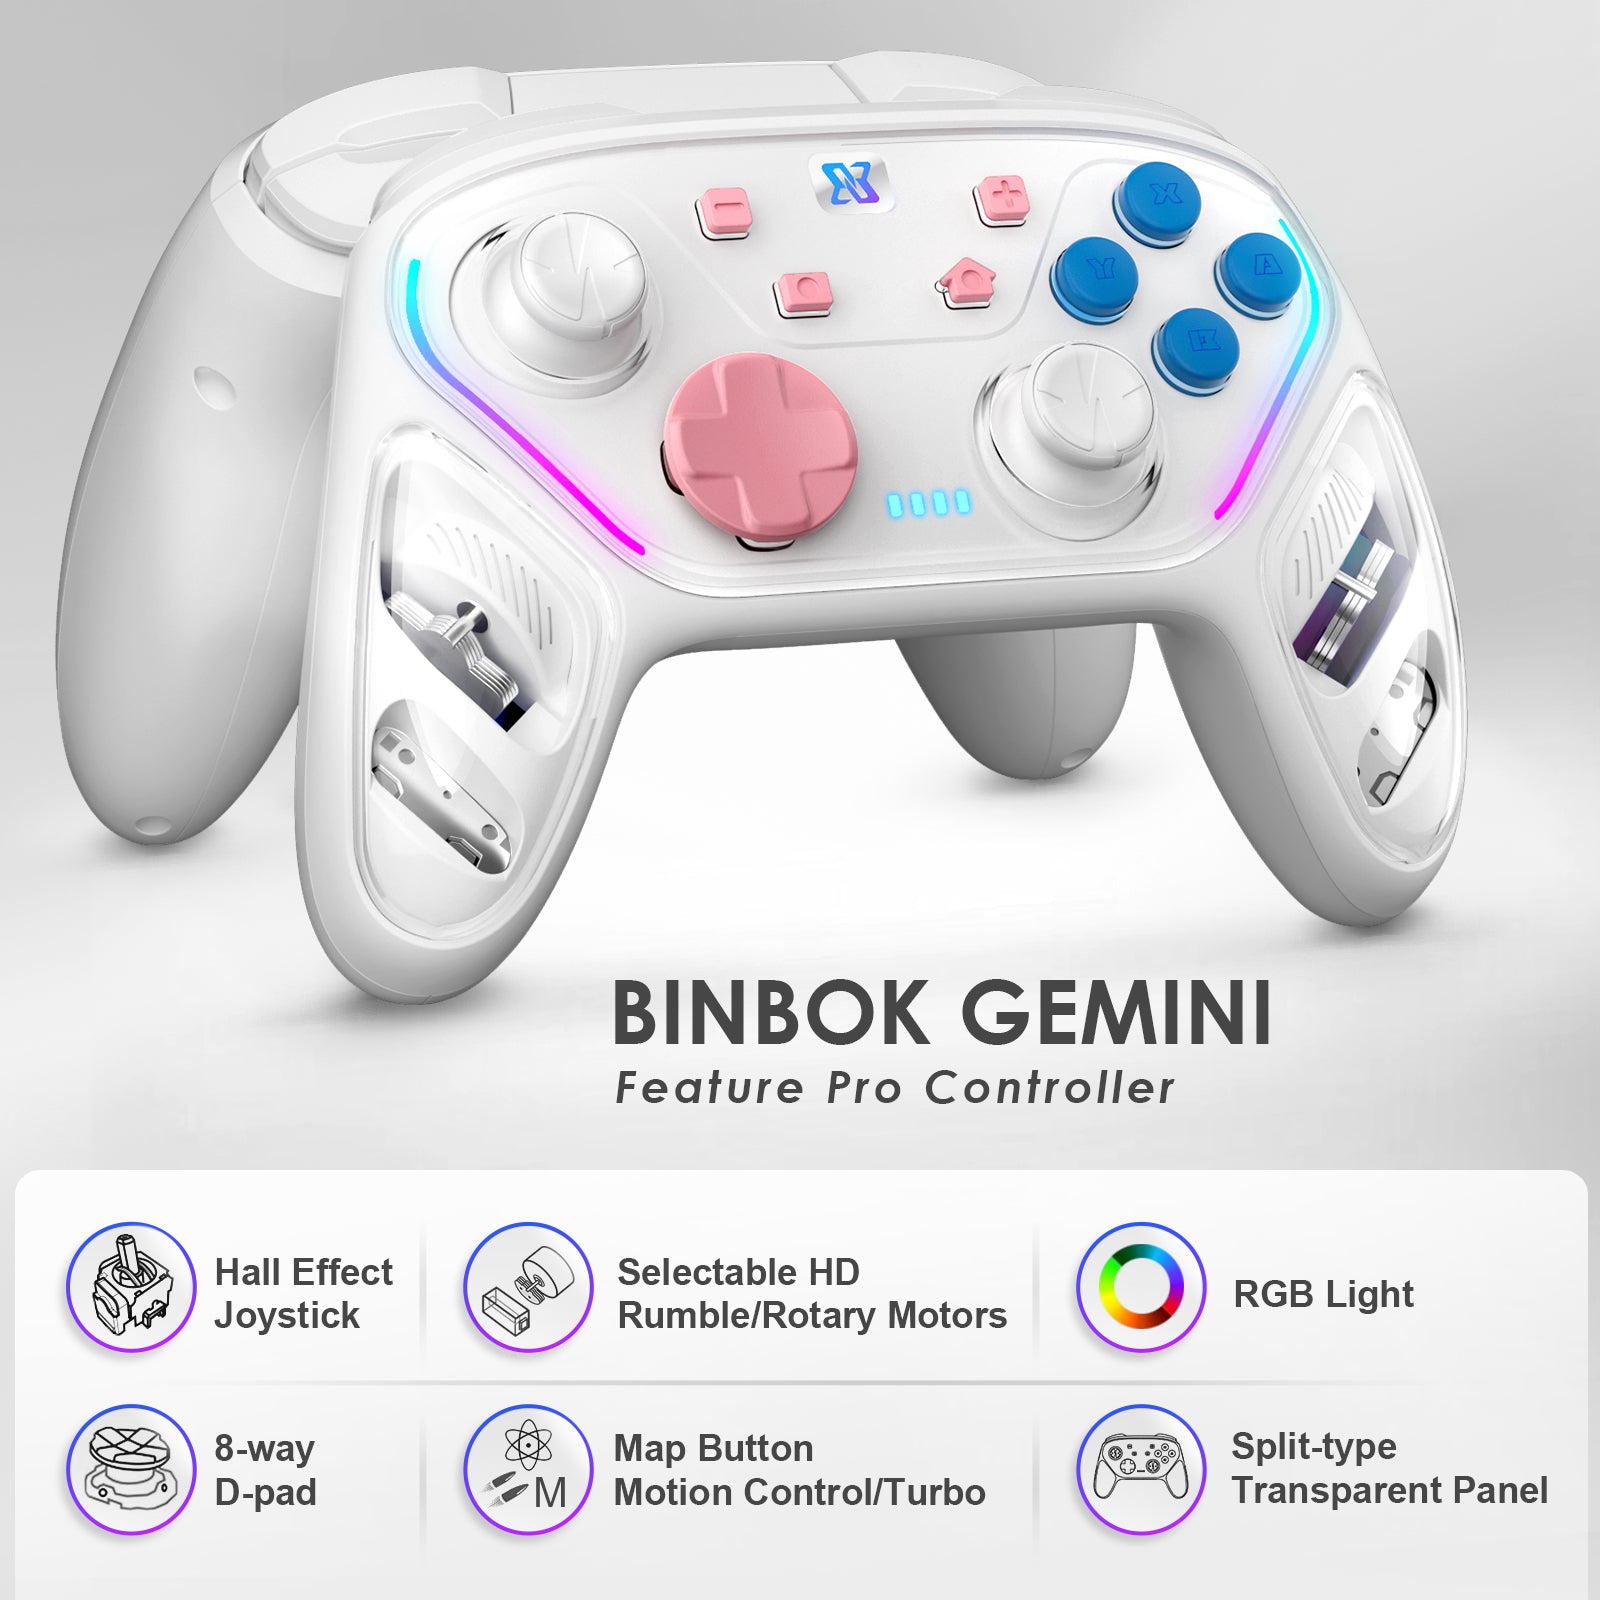 BINBOK GEMINI Feature Pro Controller